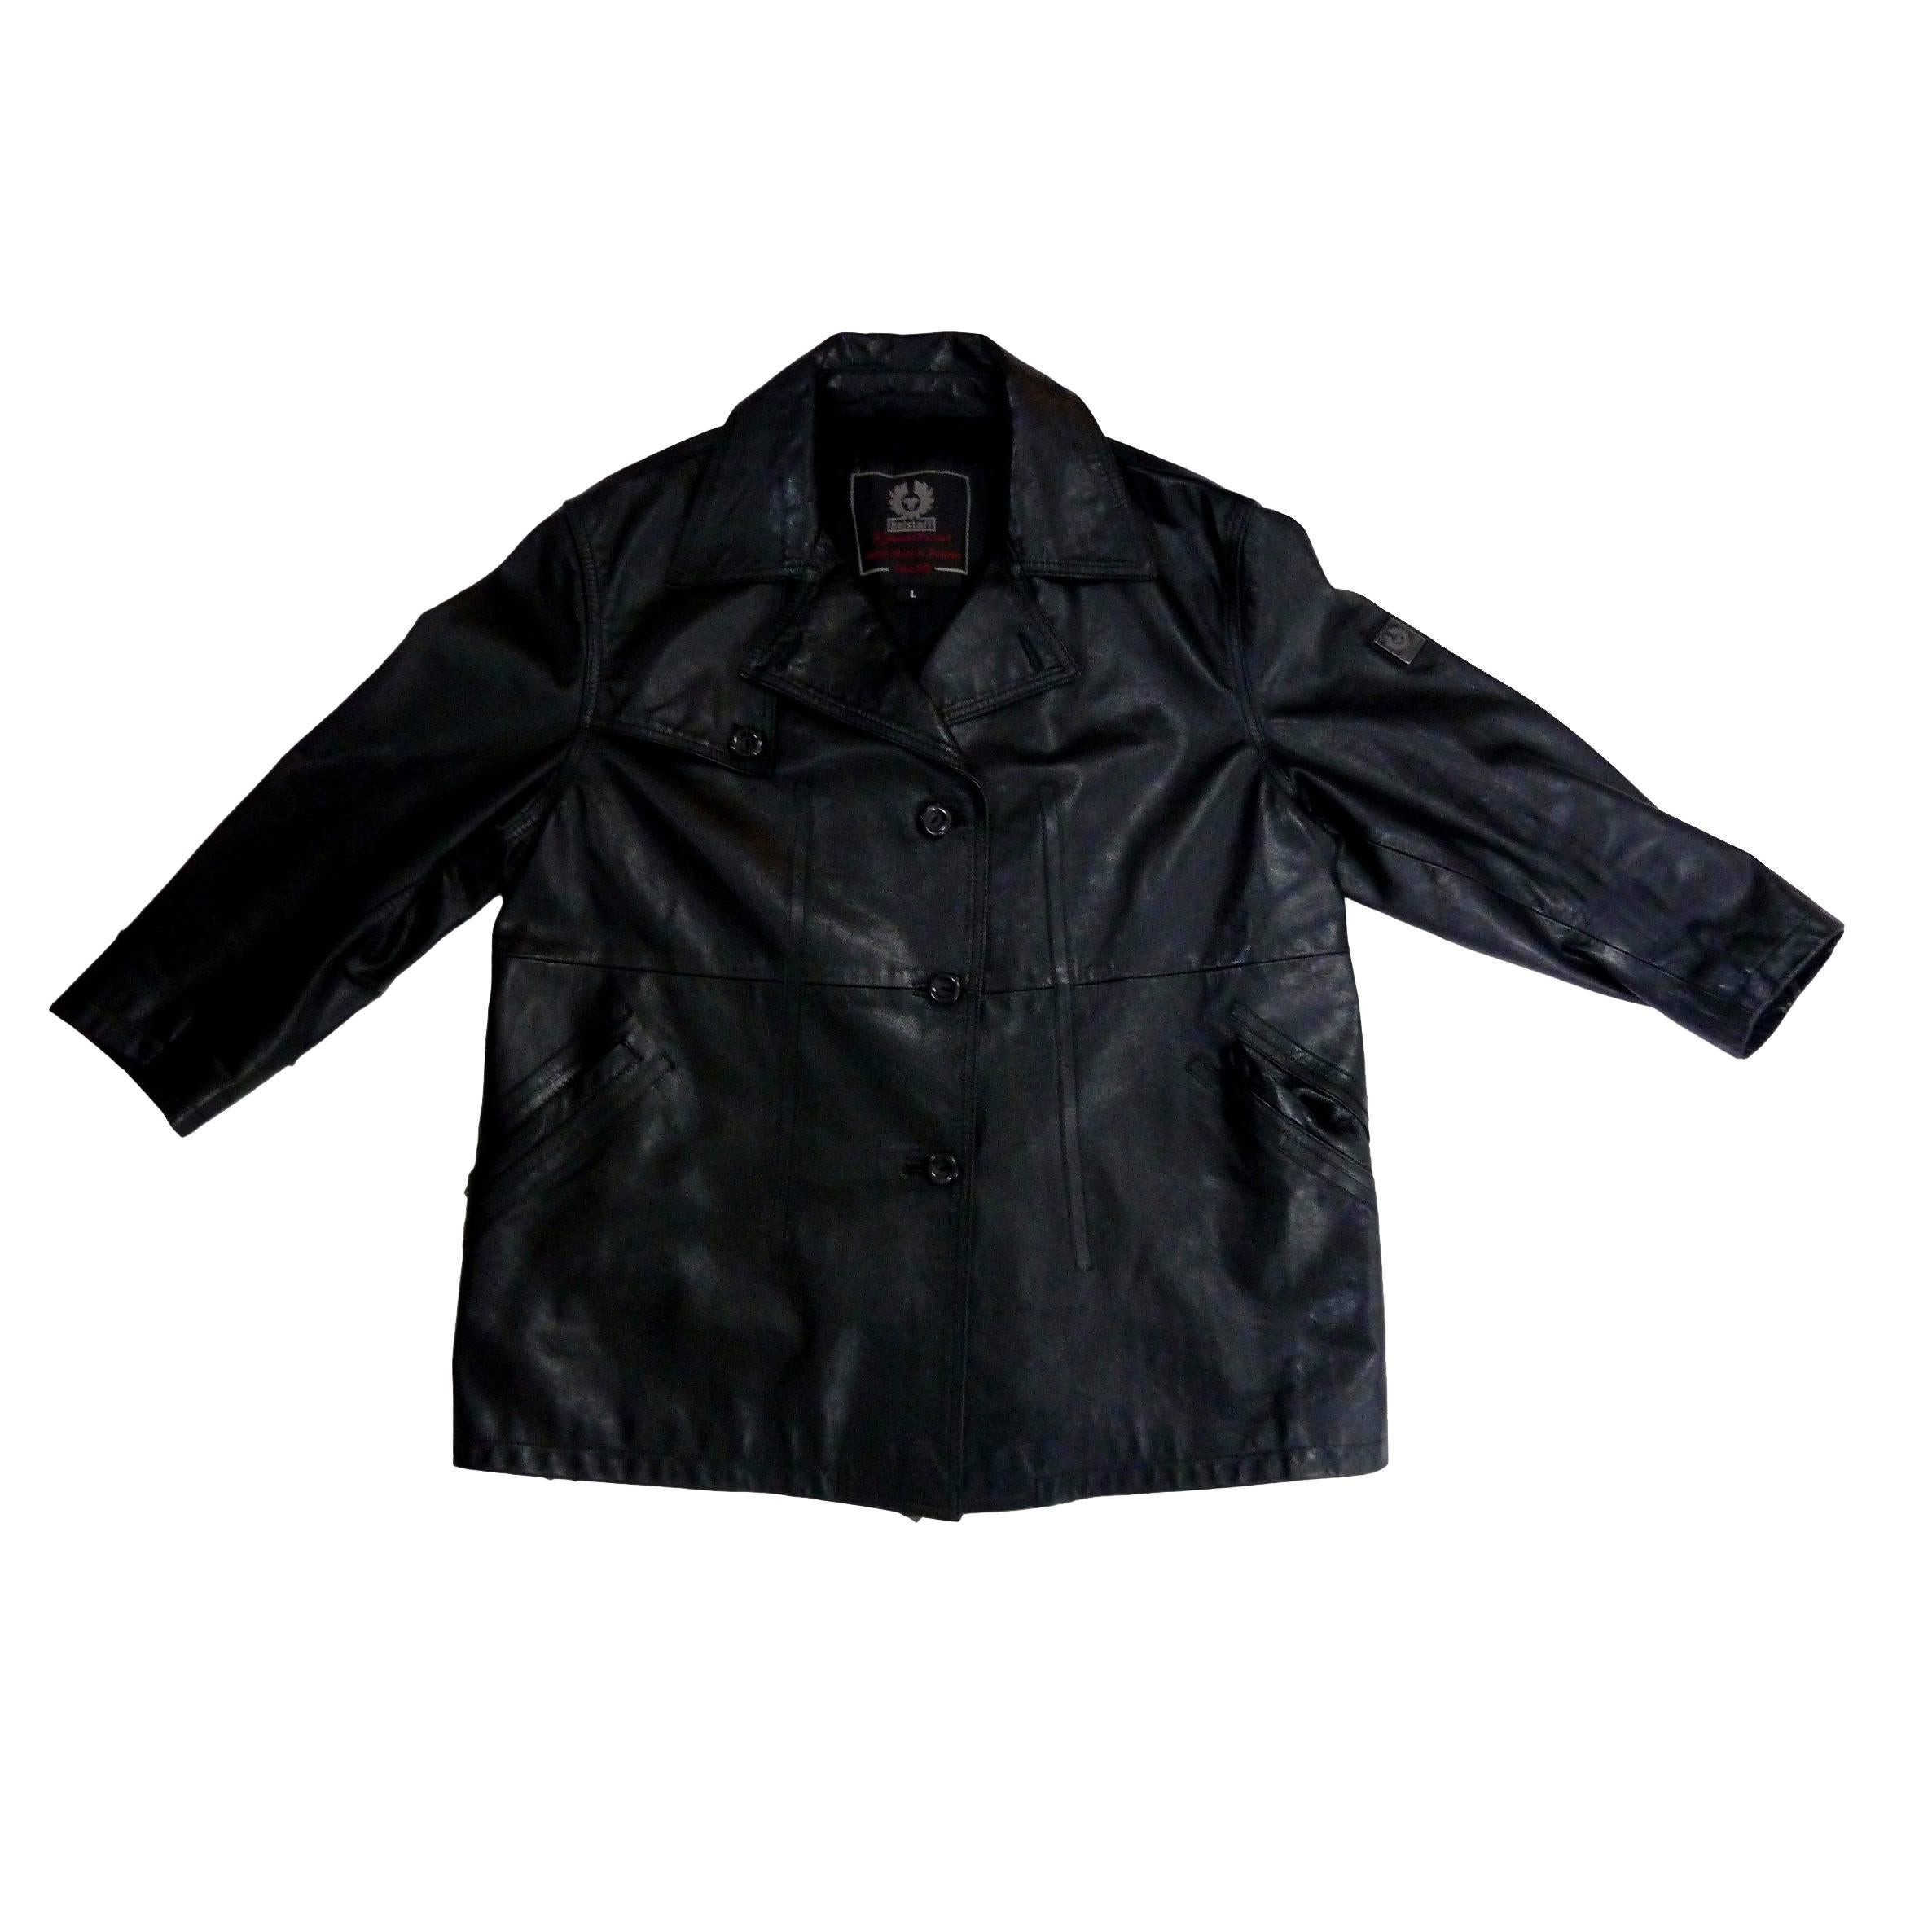 Belstaff Gold Label leather coat black men's motorcycle style size L 